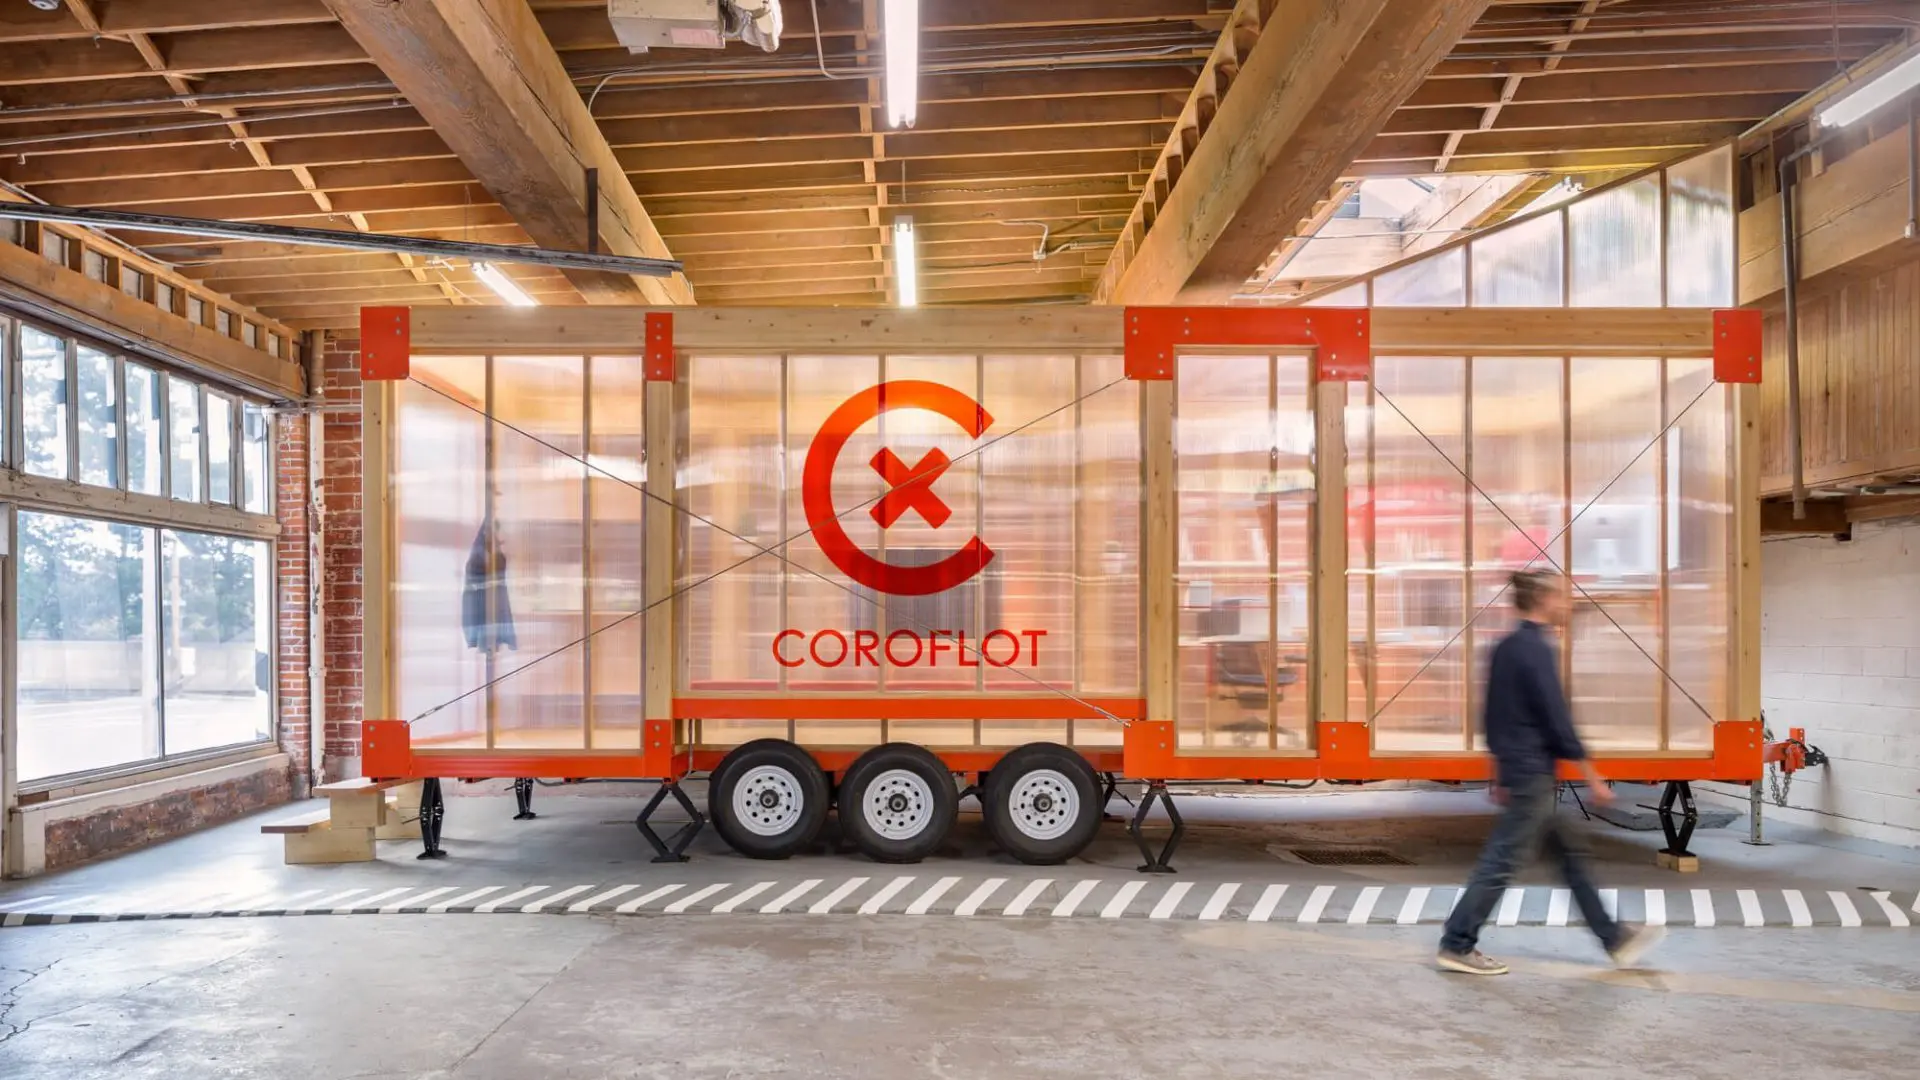 coroflot mobile work unit